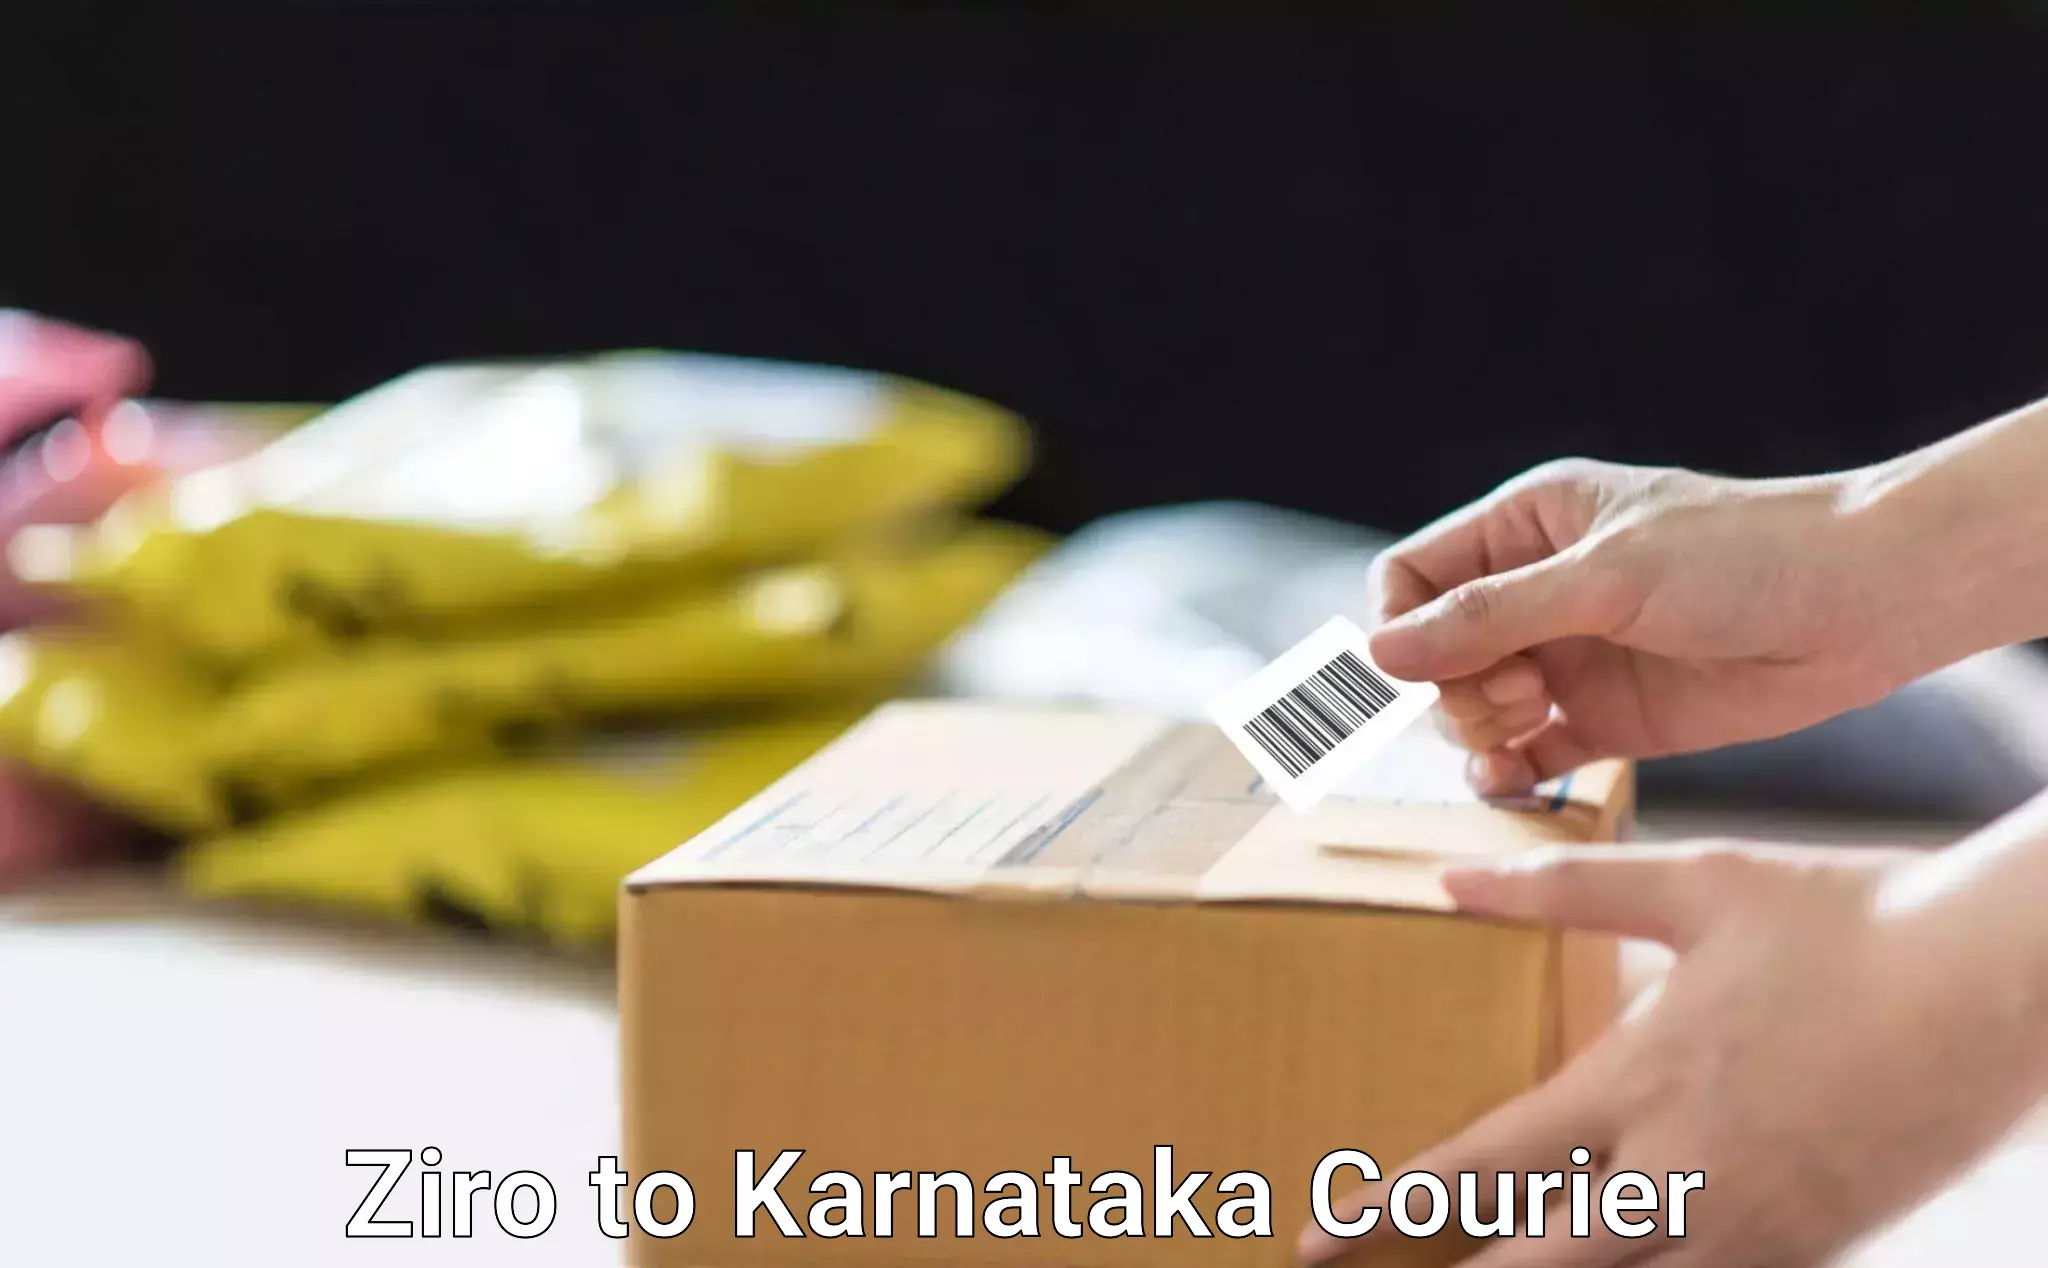 Express delivery network Ziro to Karnataka